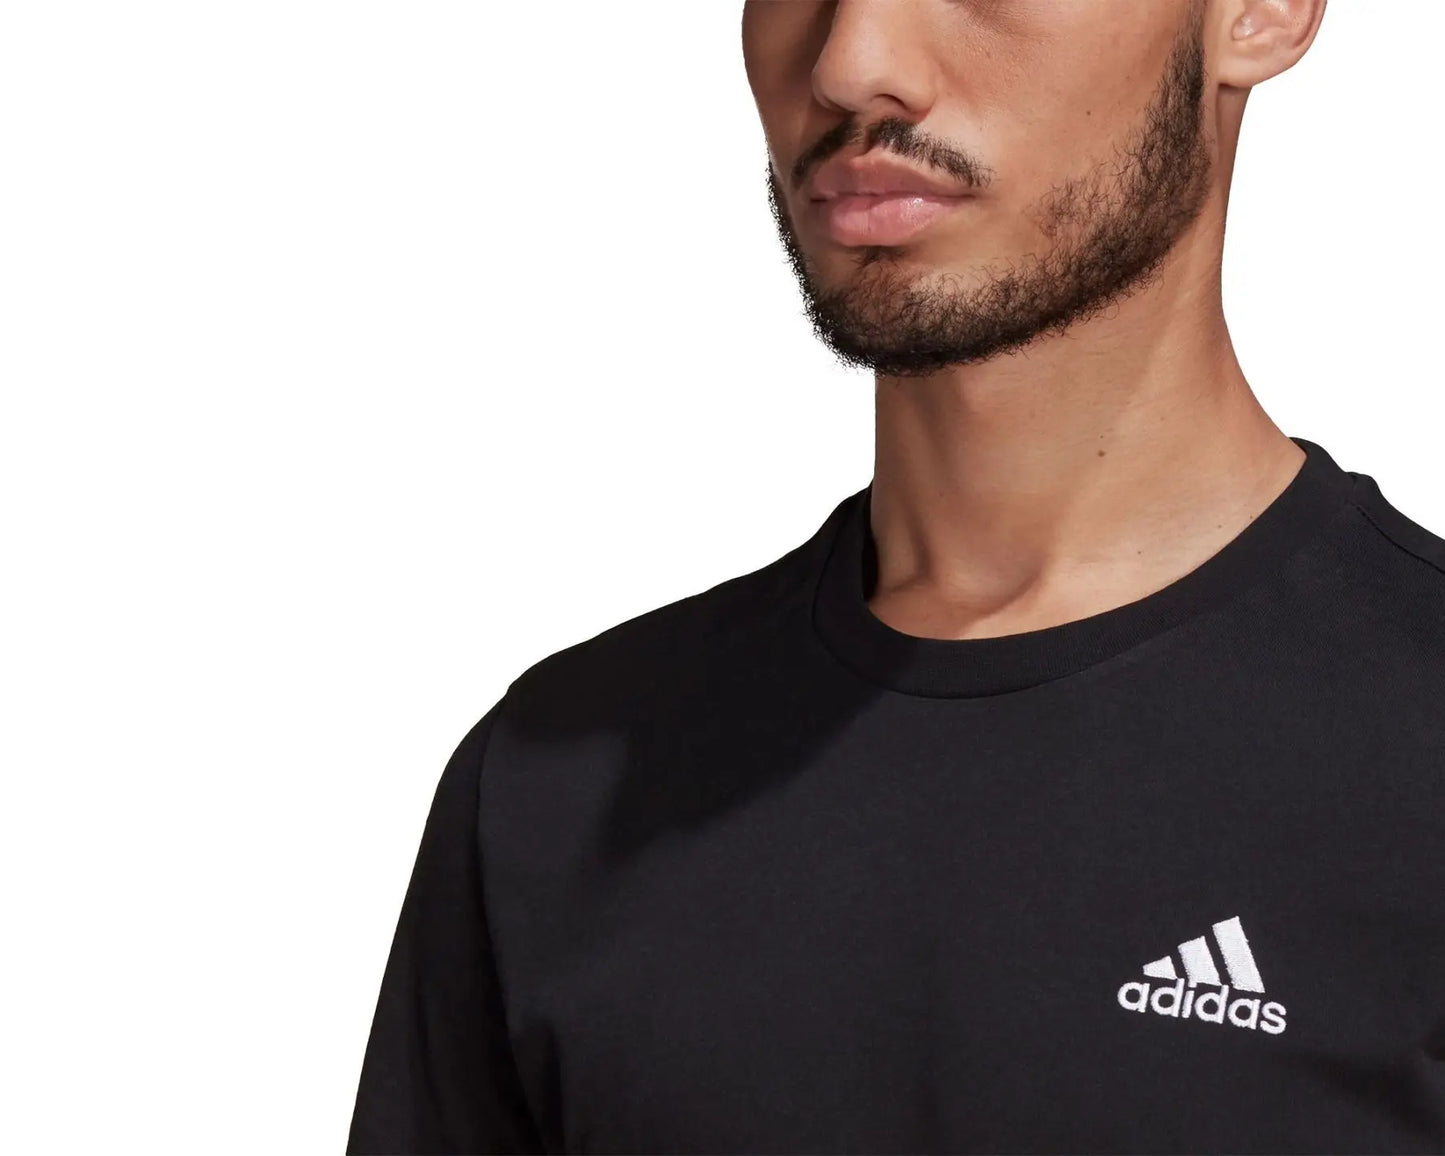 
                  
                    Adidas Original Men's Daily Wear T-Shirt Black Color Sporty Walking Training Training Sports Daily M Sl Sj T-Shirt
                  
                